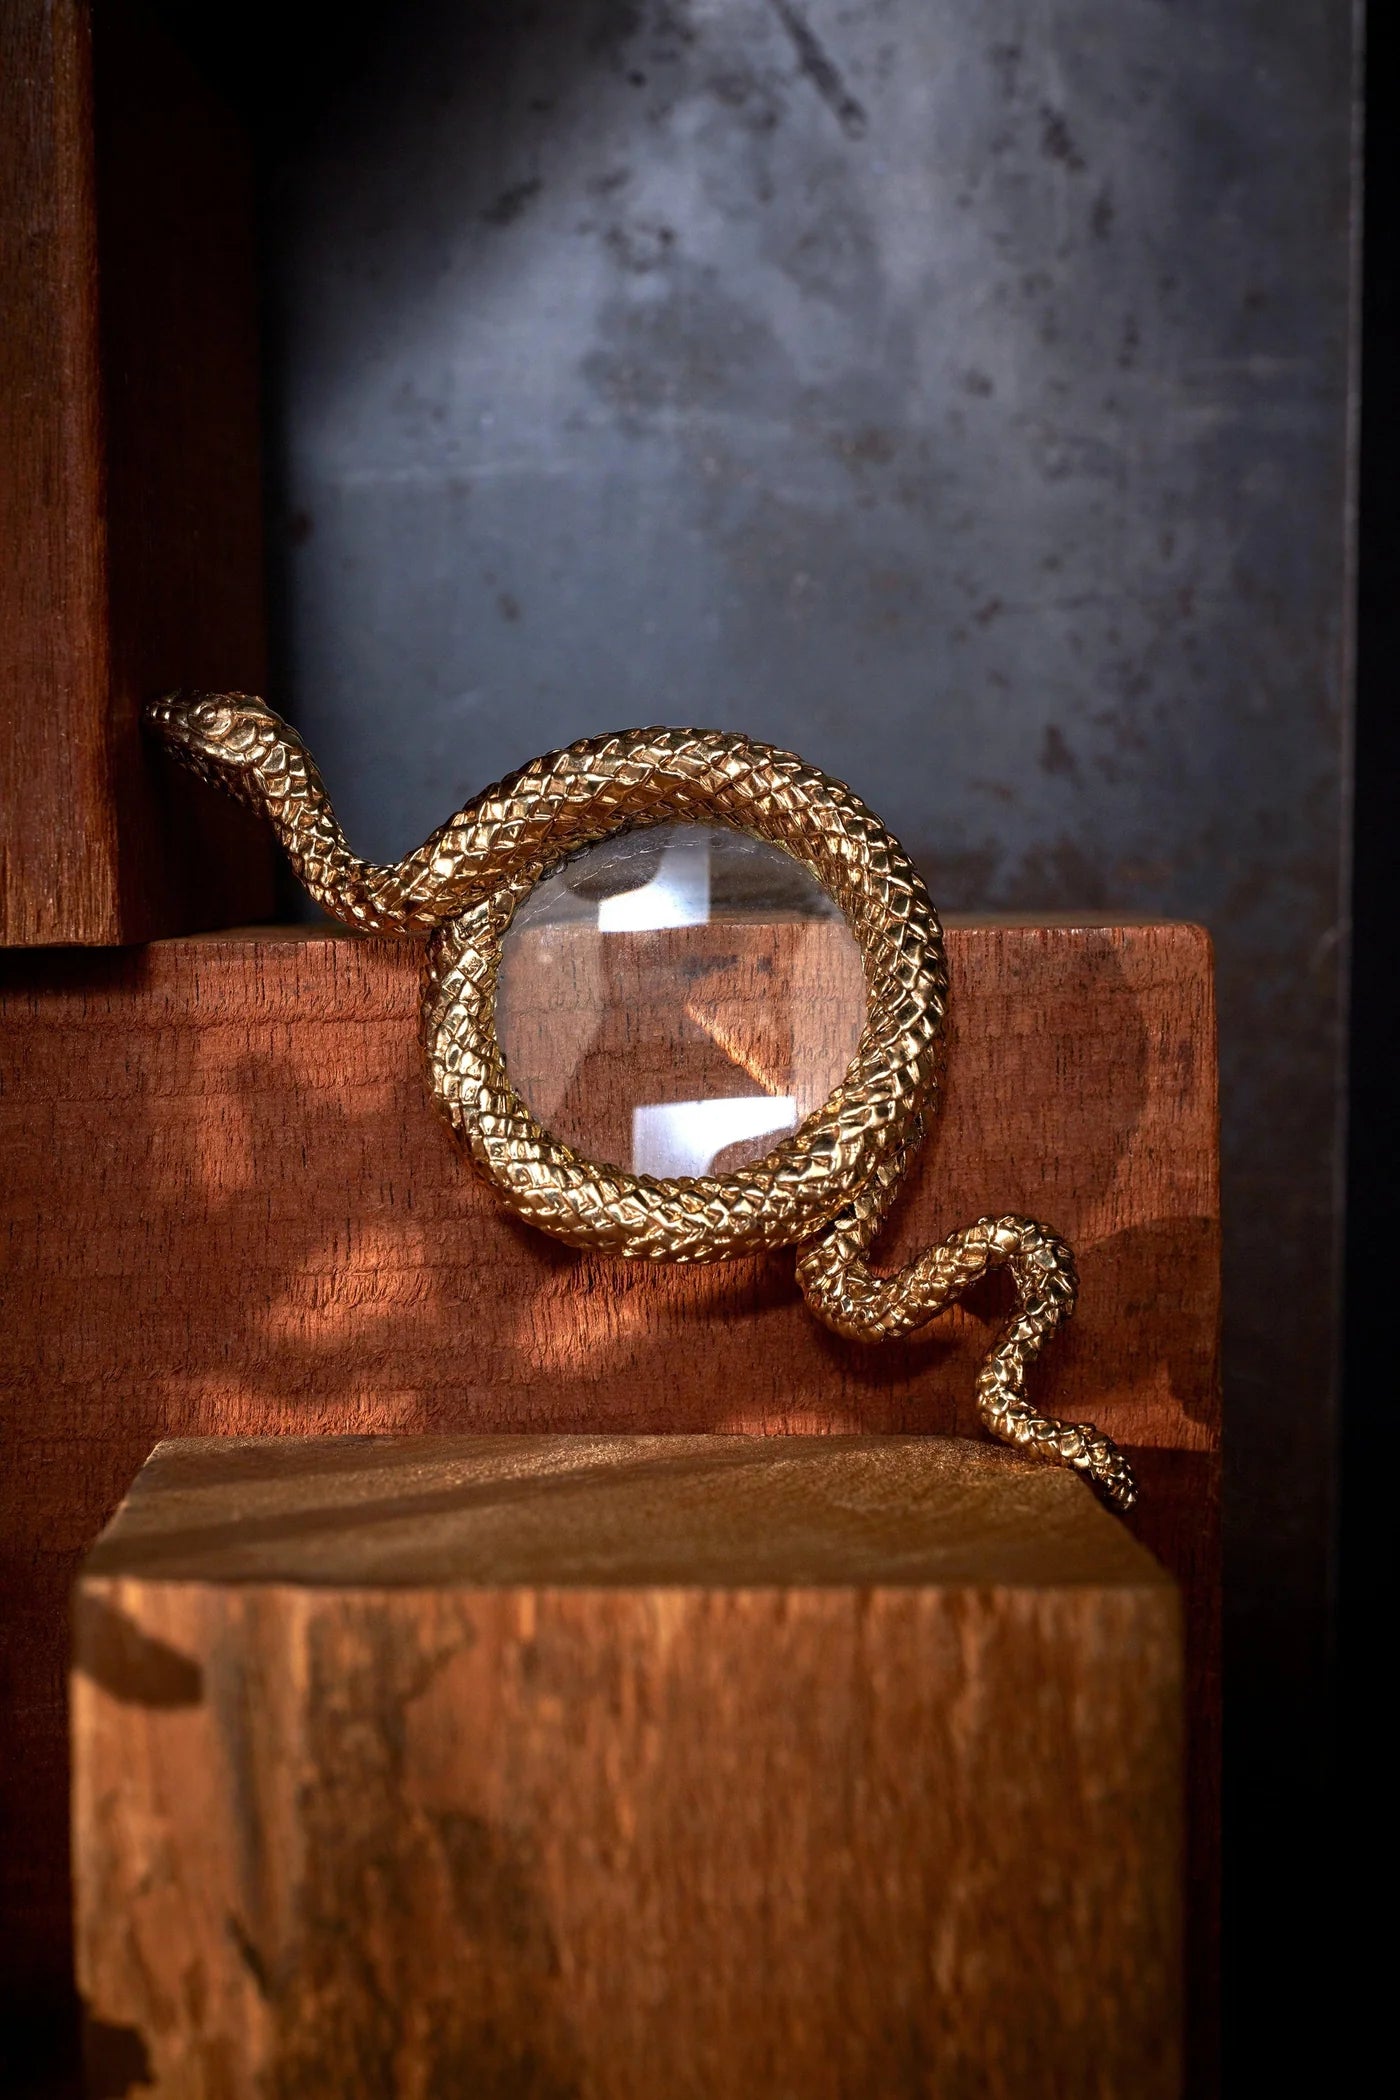 Snake Magnifying Glass